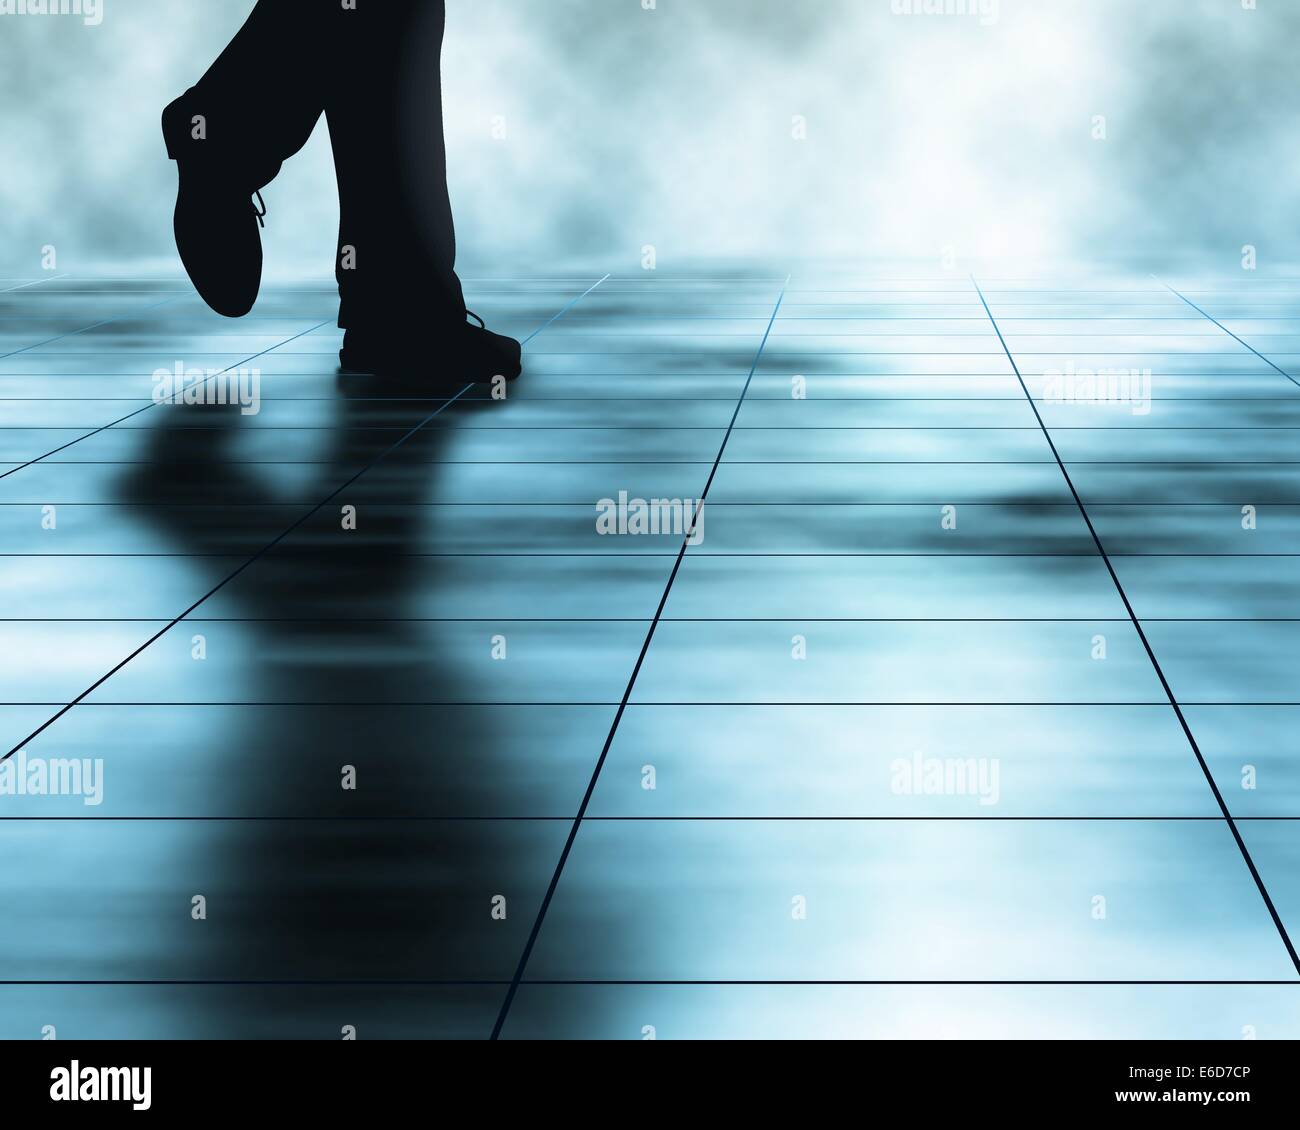 Editable vector illustration of a man walking across a tiled floor made using a gradient mesh Stock Vector